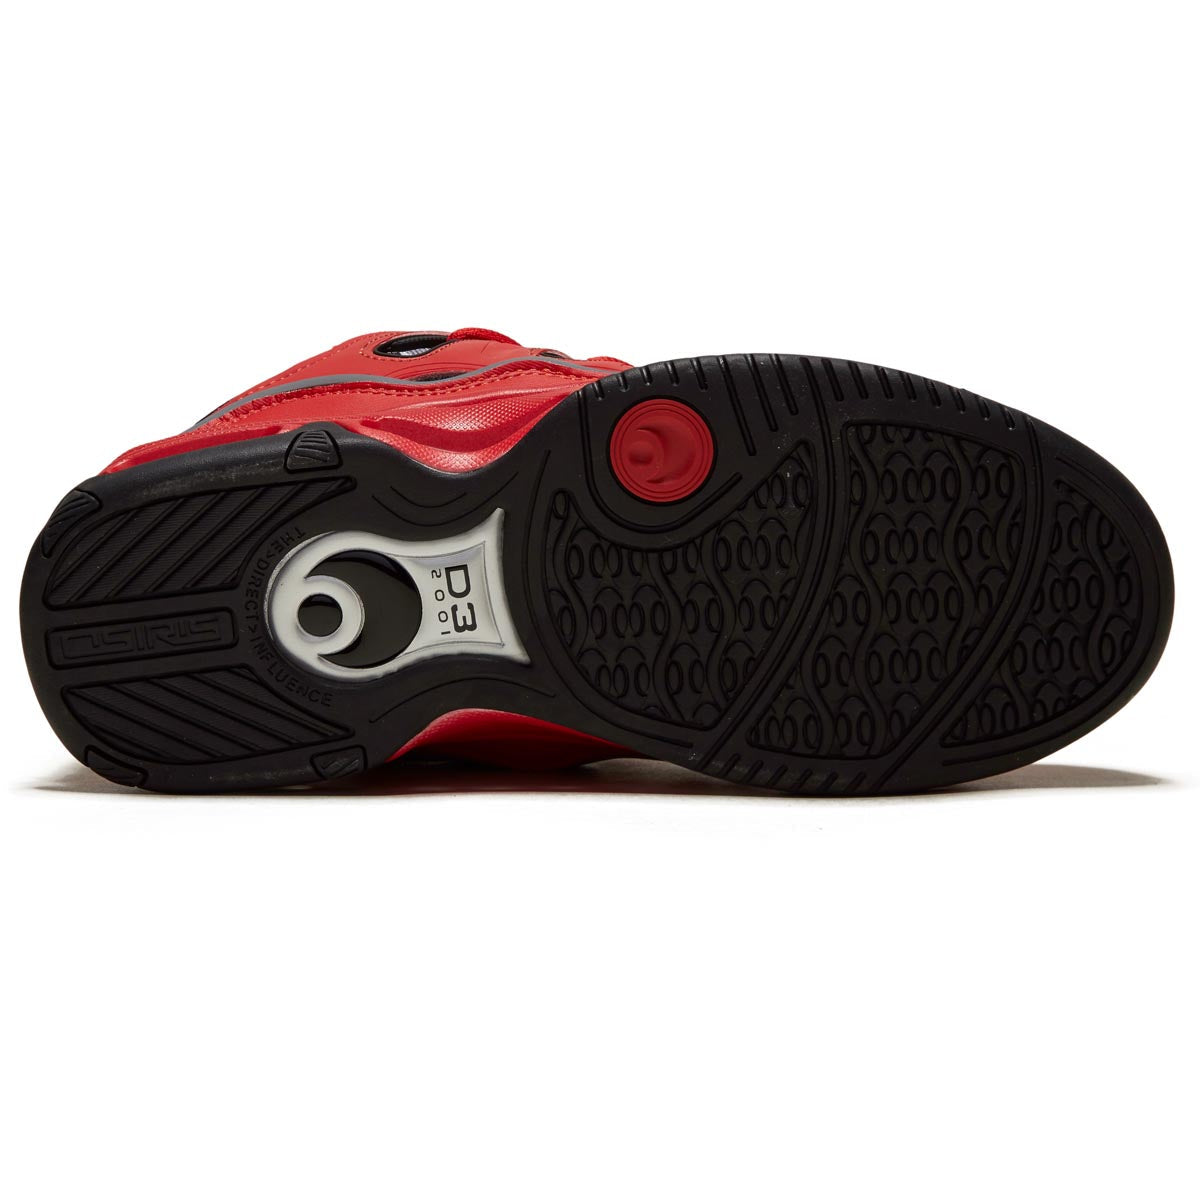 Osiris D3 2001 Shoes - Red/Black/Grey image 4